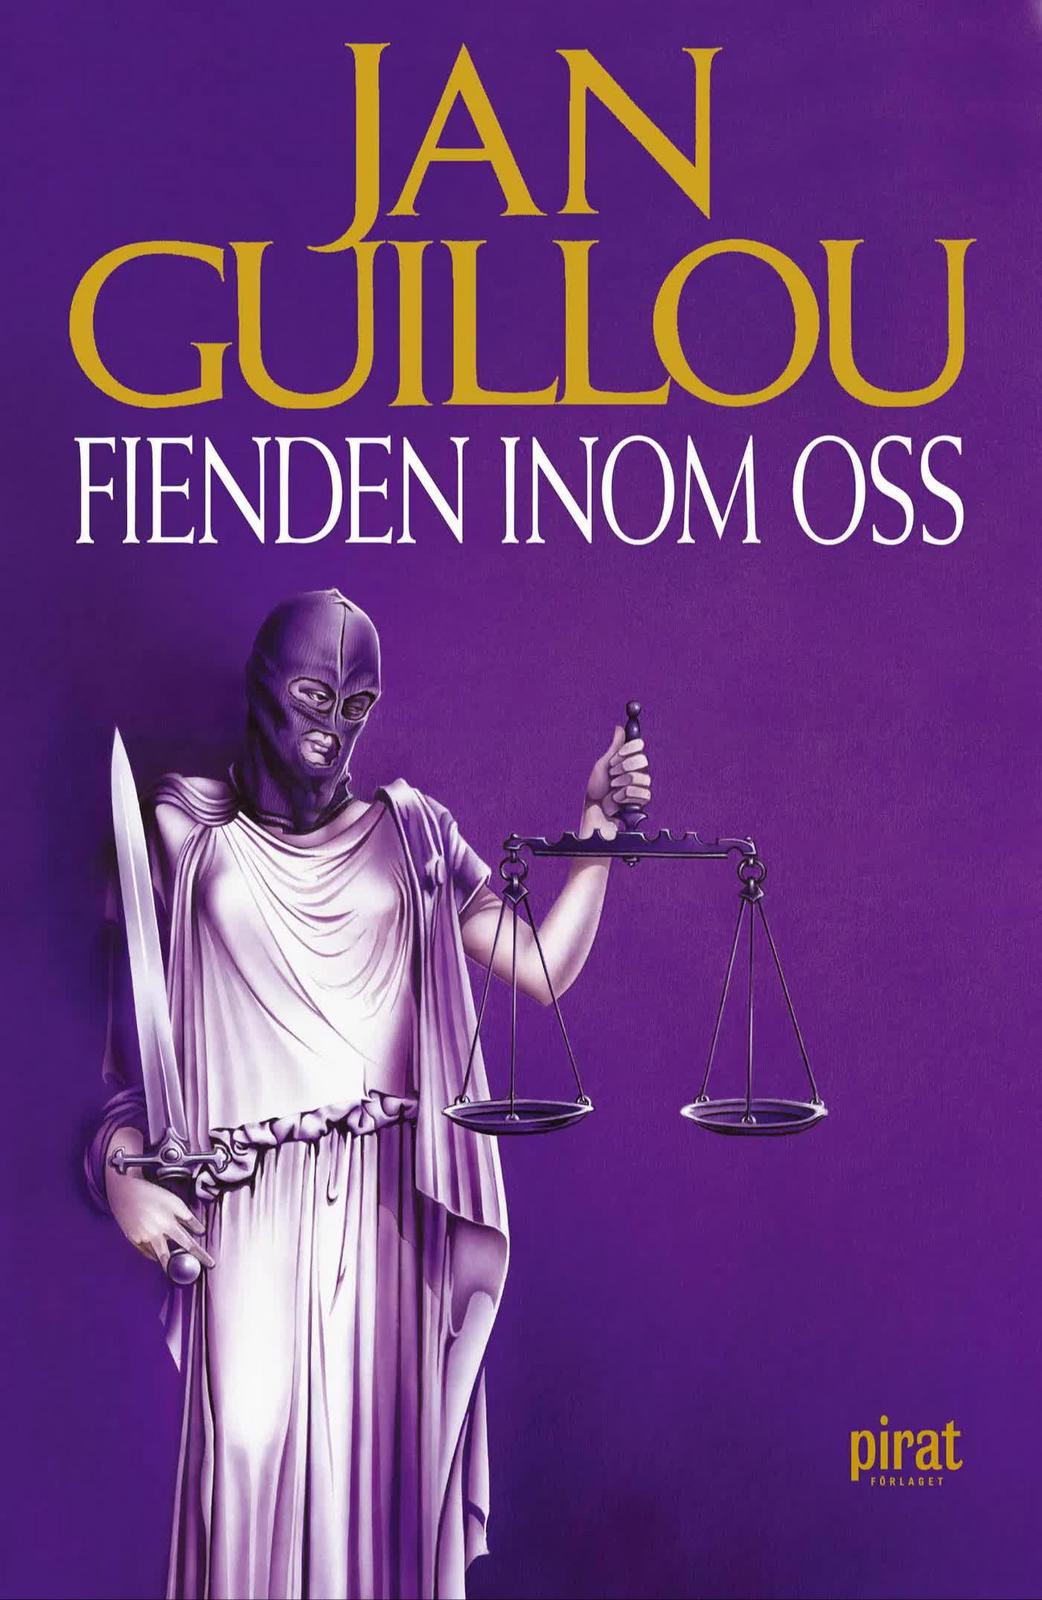 Jan Guillou: Fienden inom oss (EBook, Swedish language, 2007, Piratförlaget)